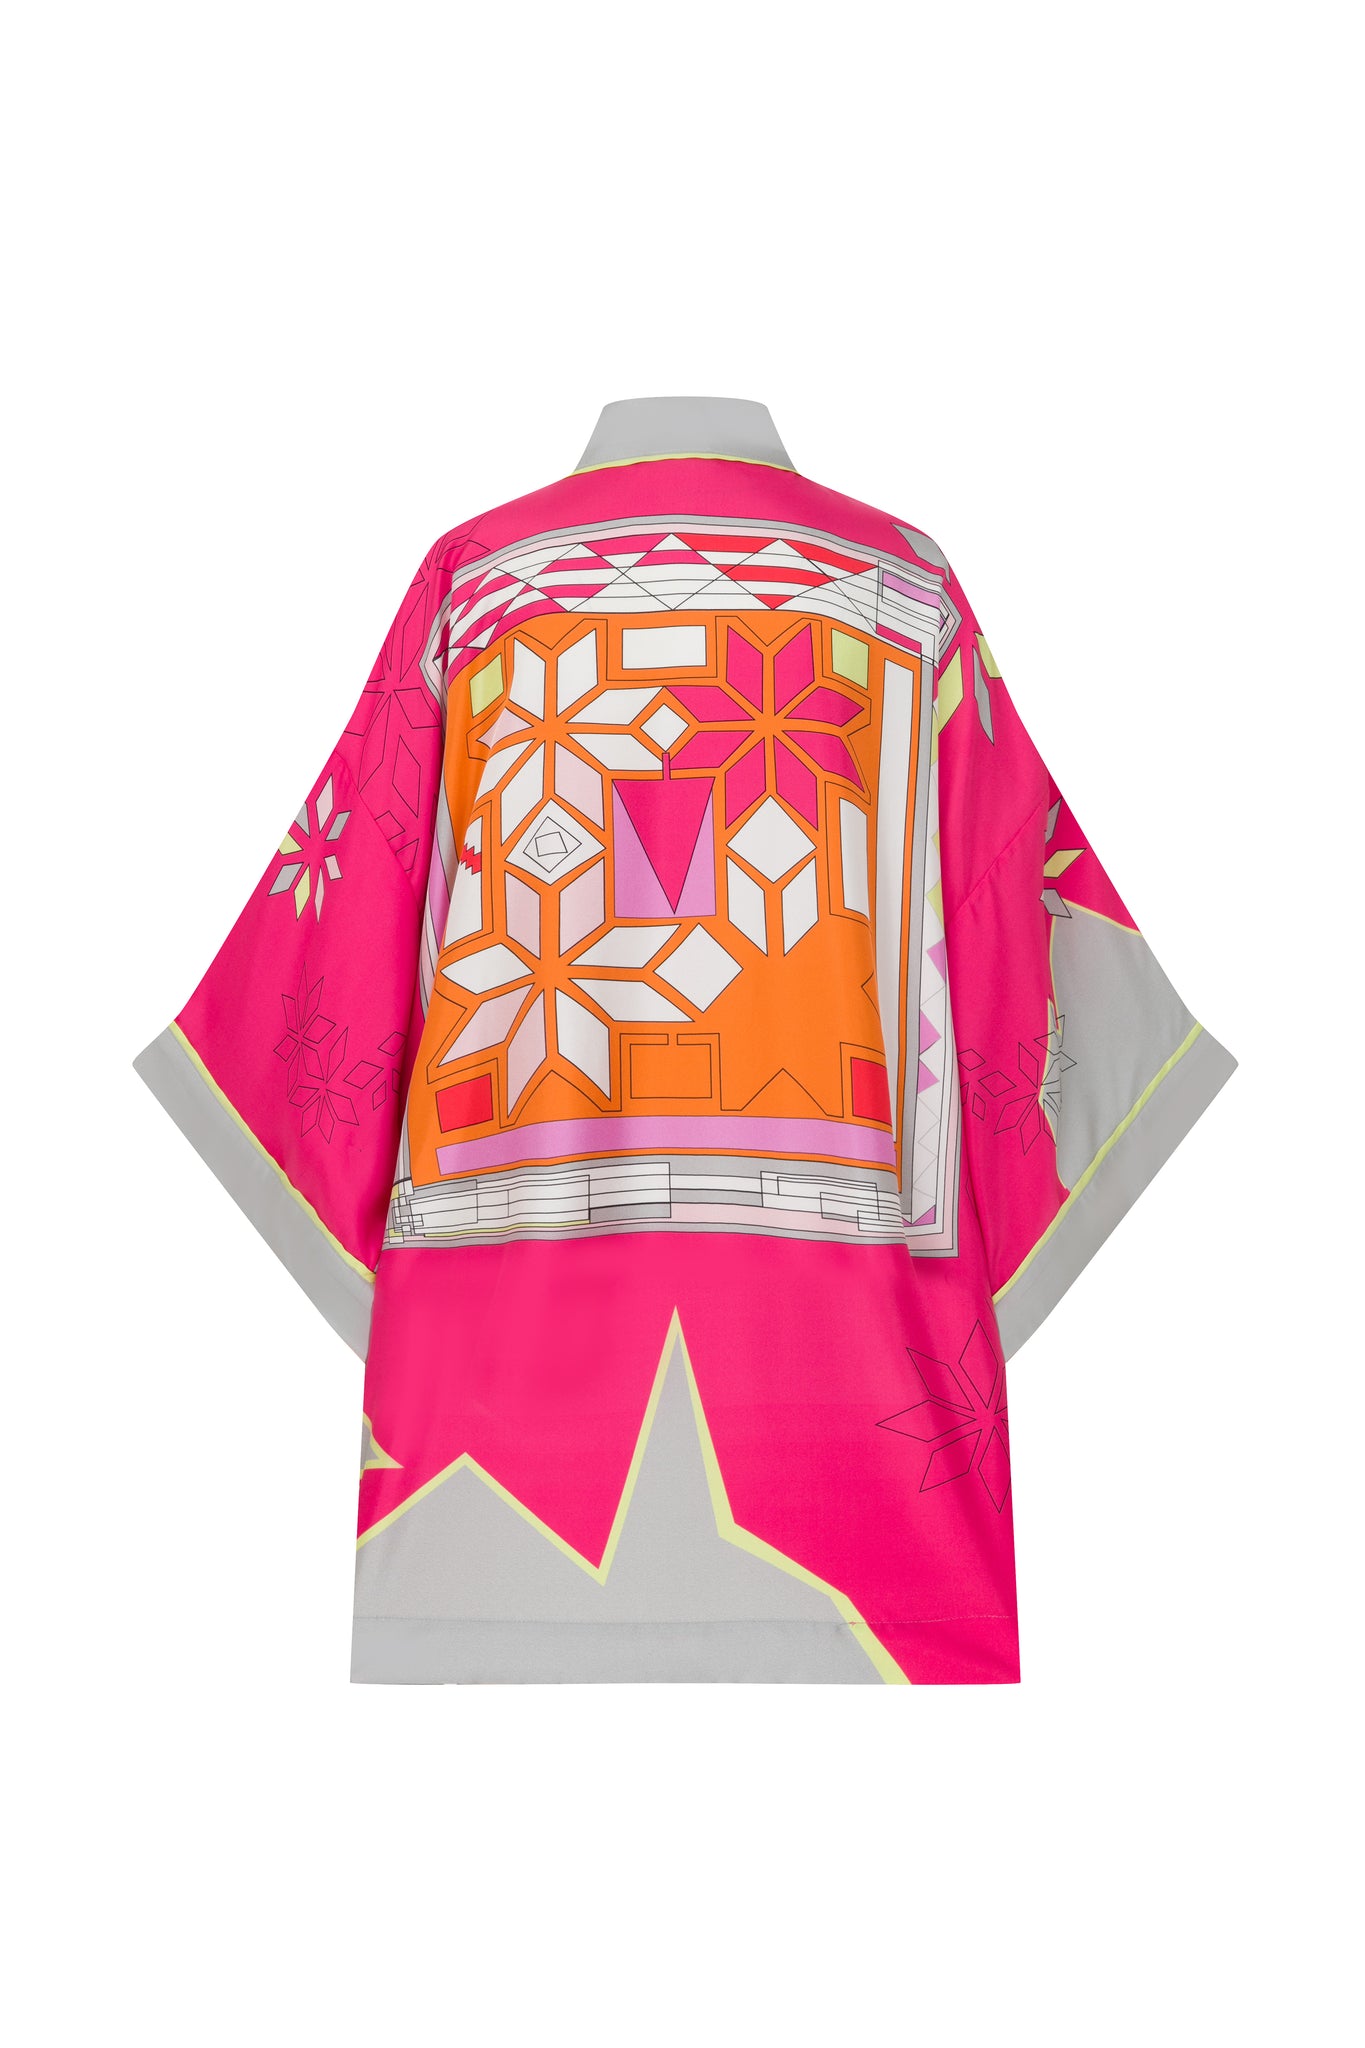 Zeugma Silk Kimono